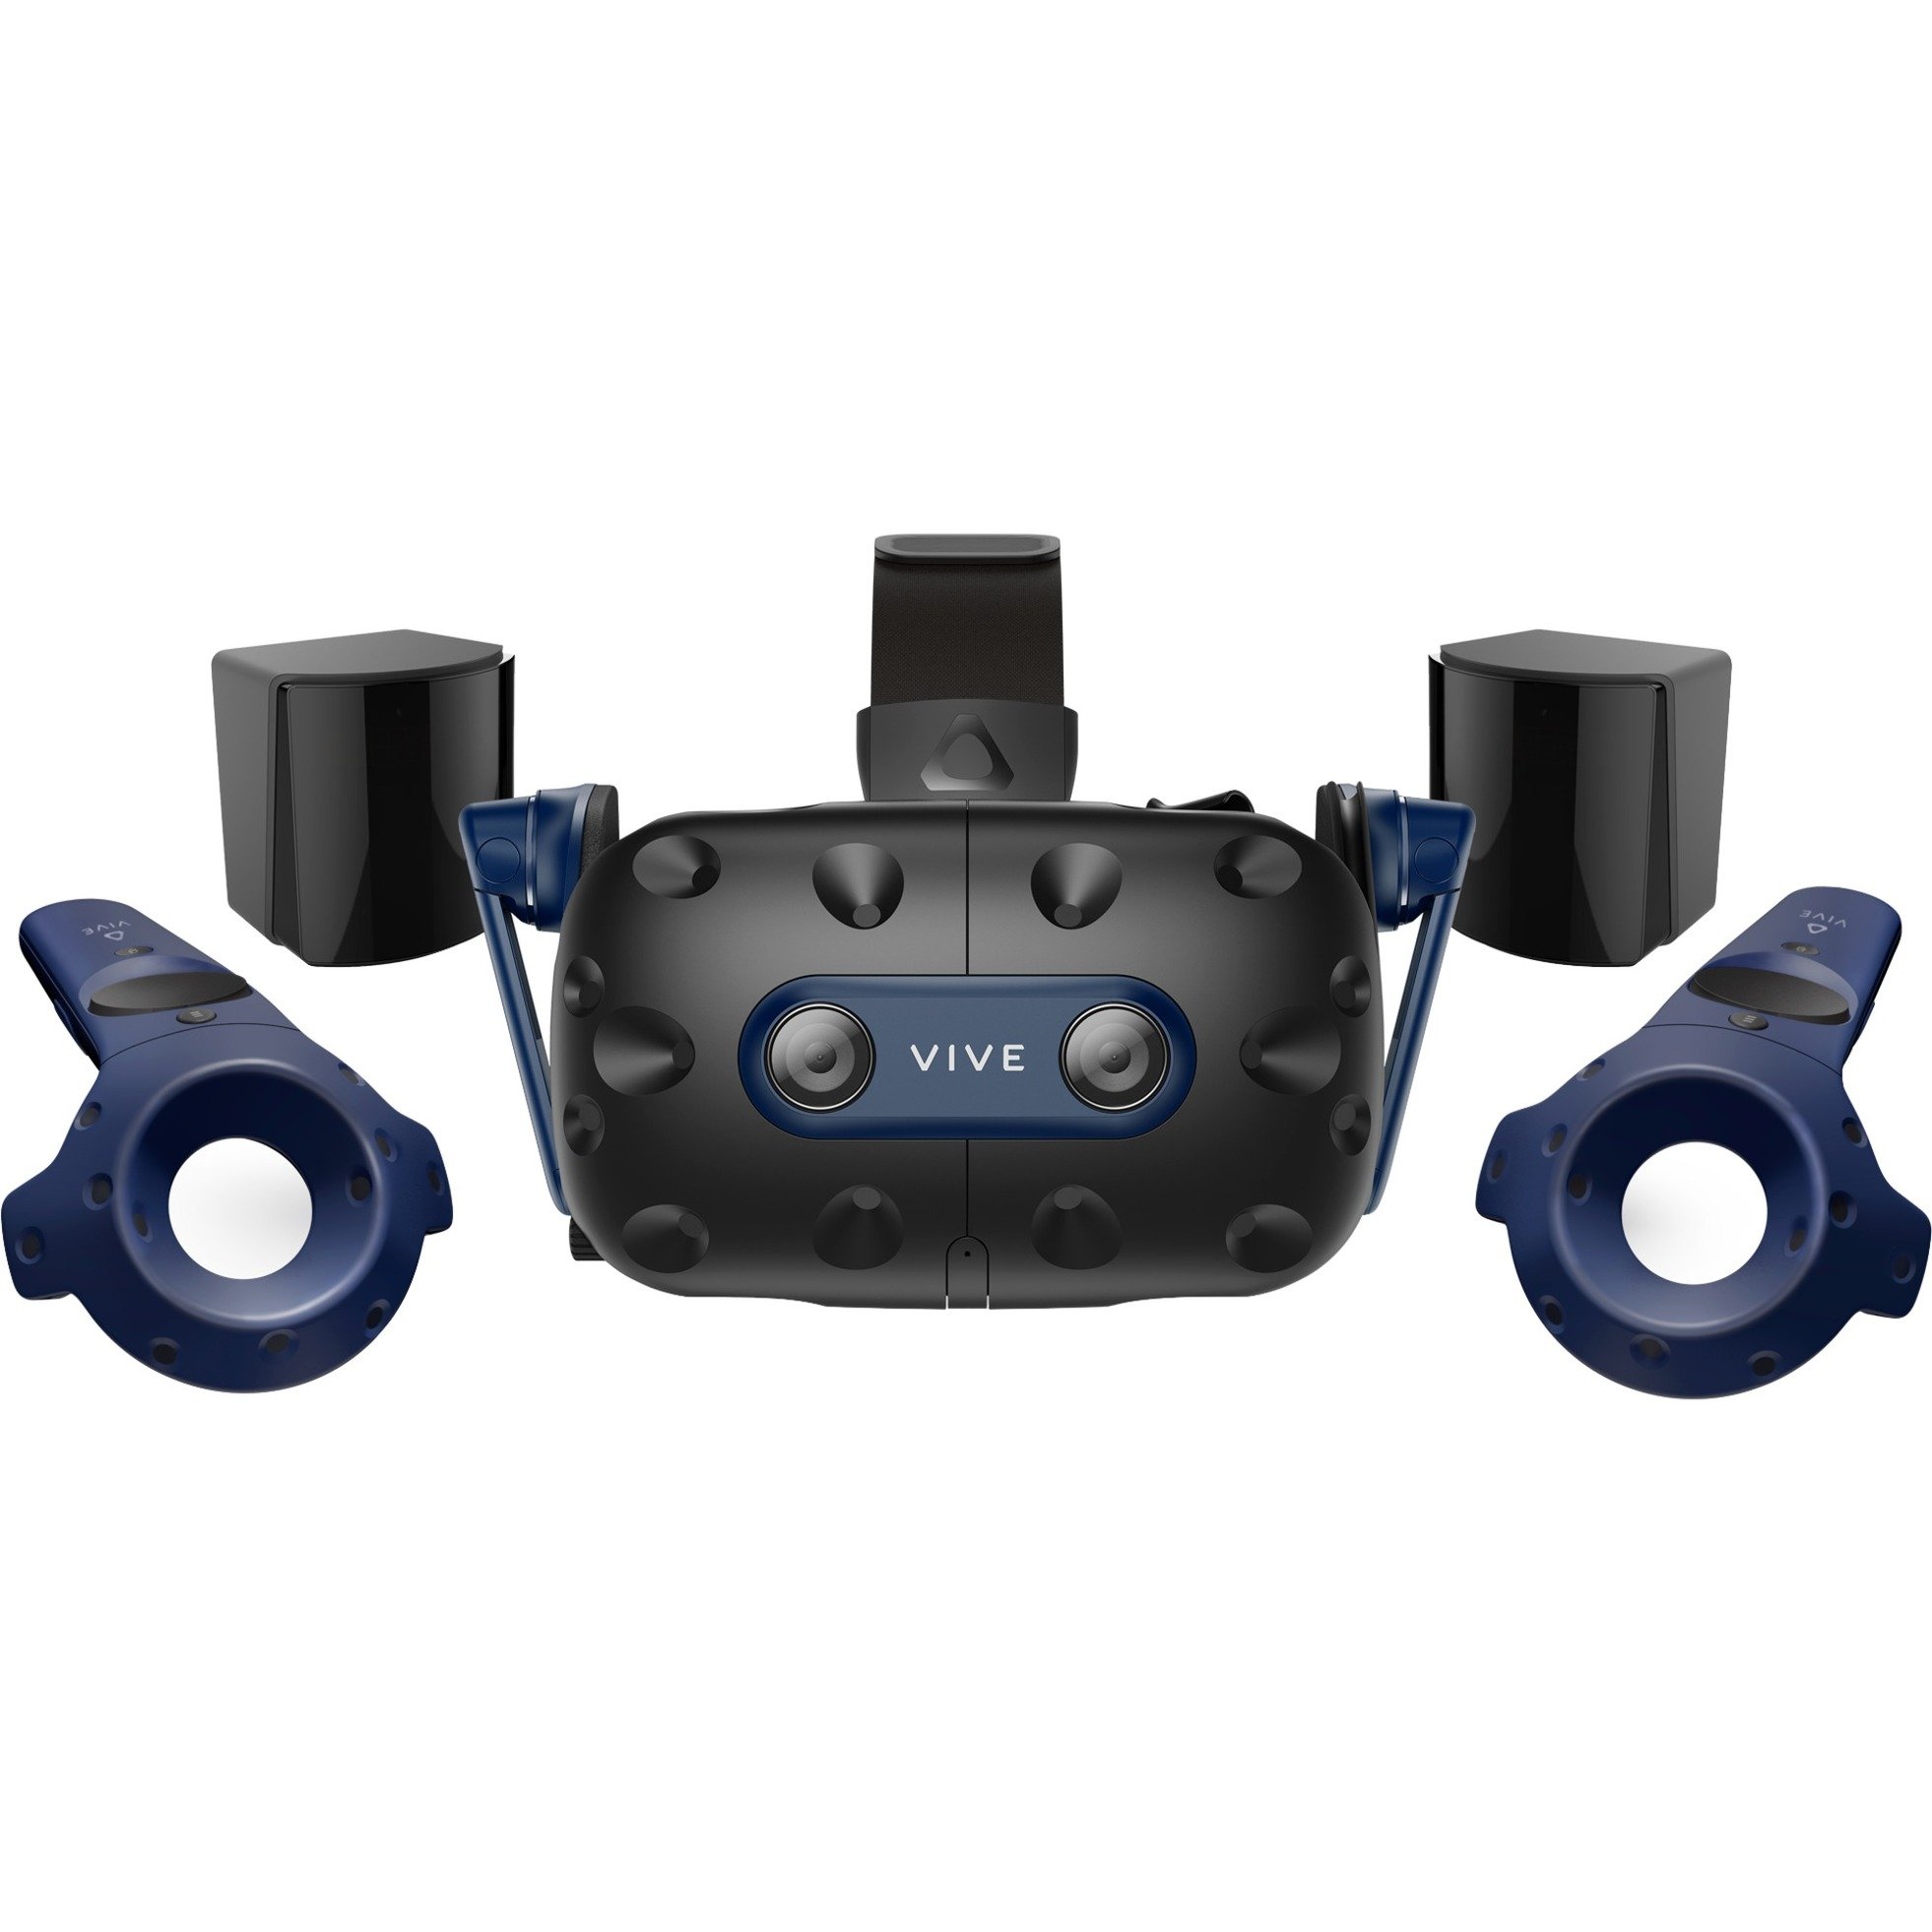 VIVE Pro 2 VR Brille (Full Kit) inklusive Spiel (Ruins Magus)